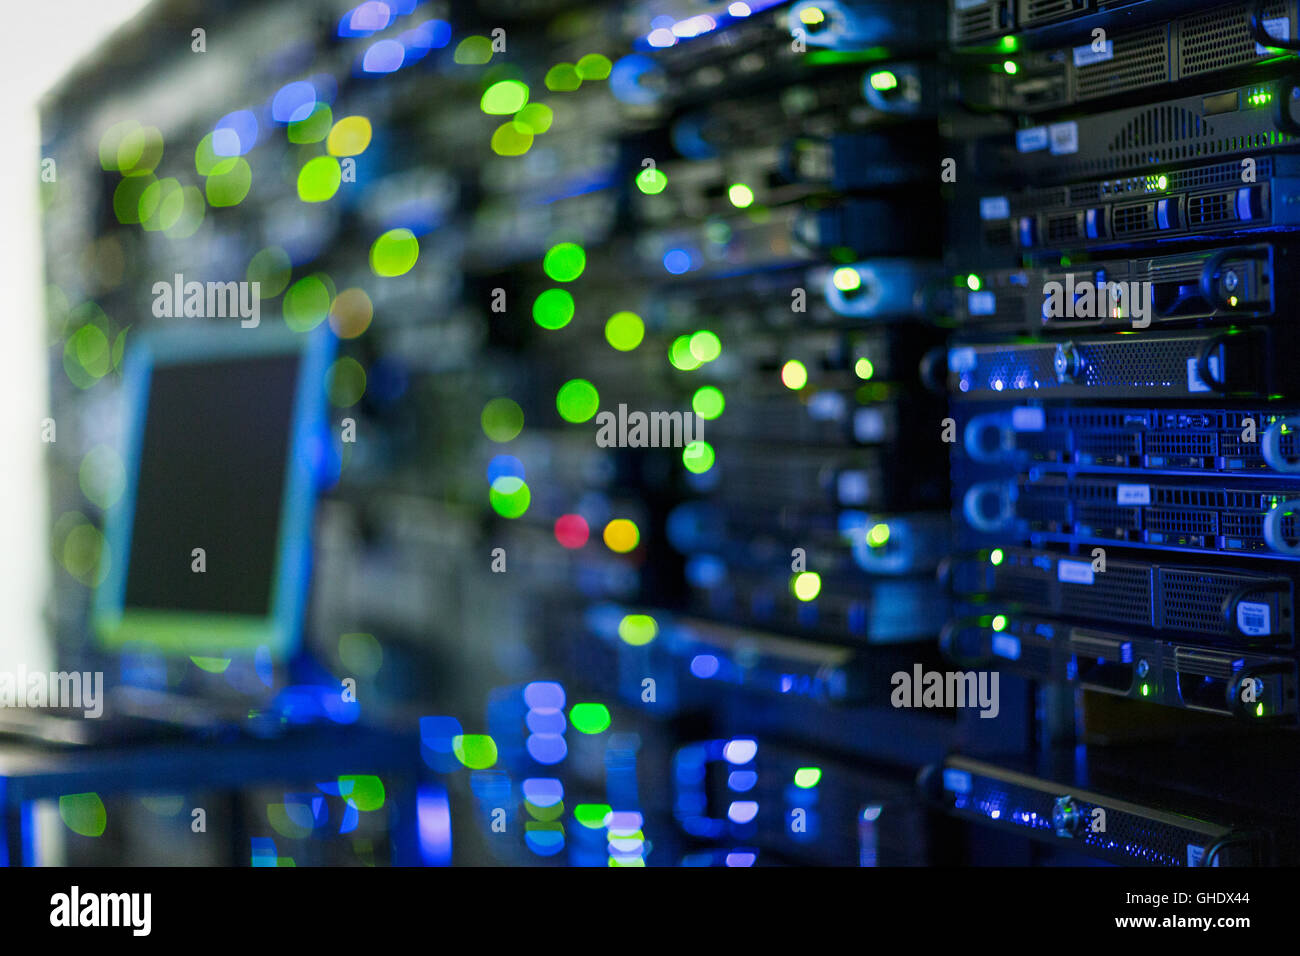 Illuminated server room panel Stock Photo